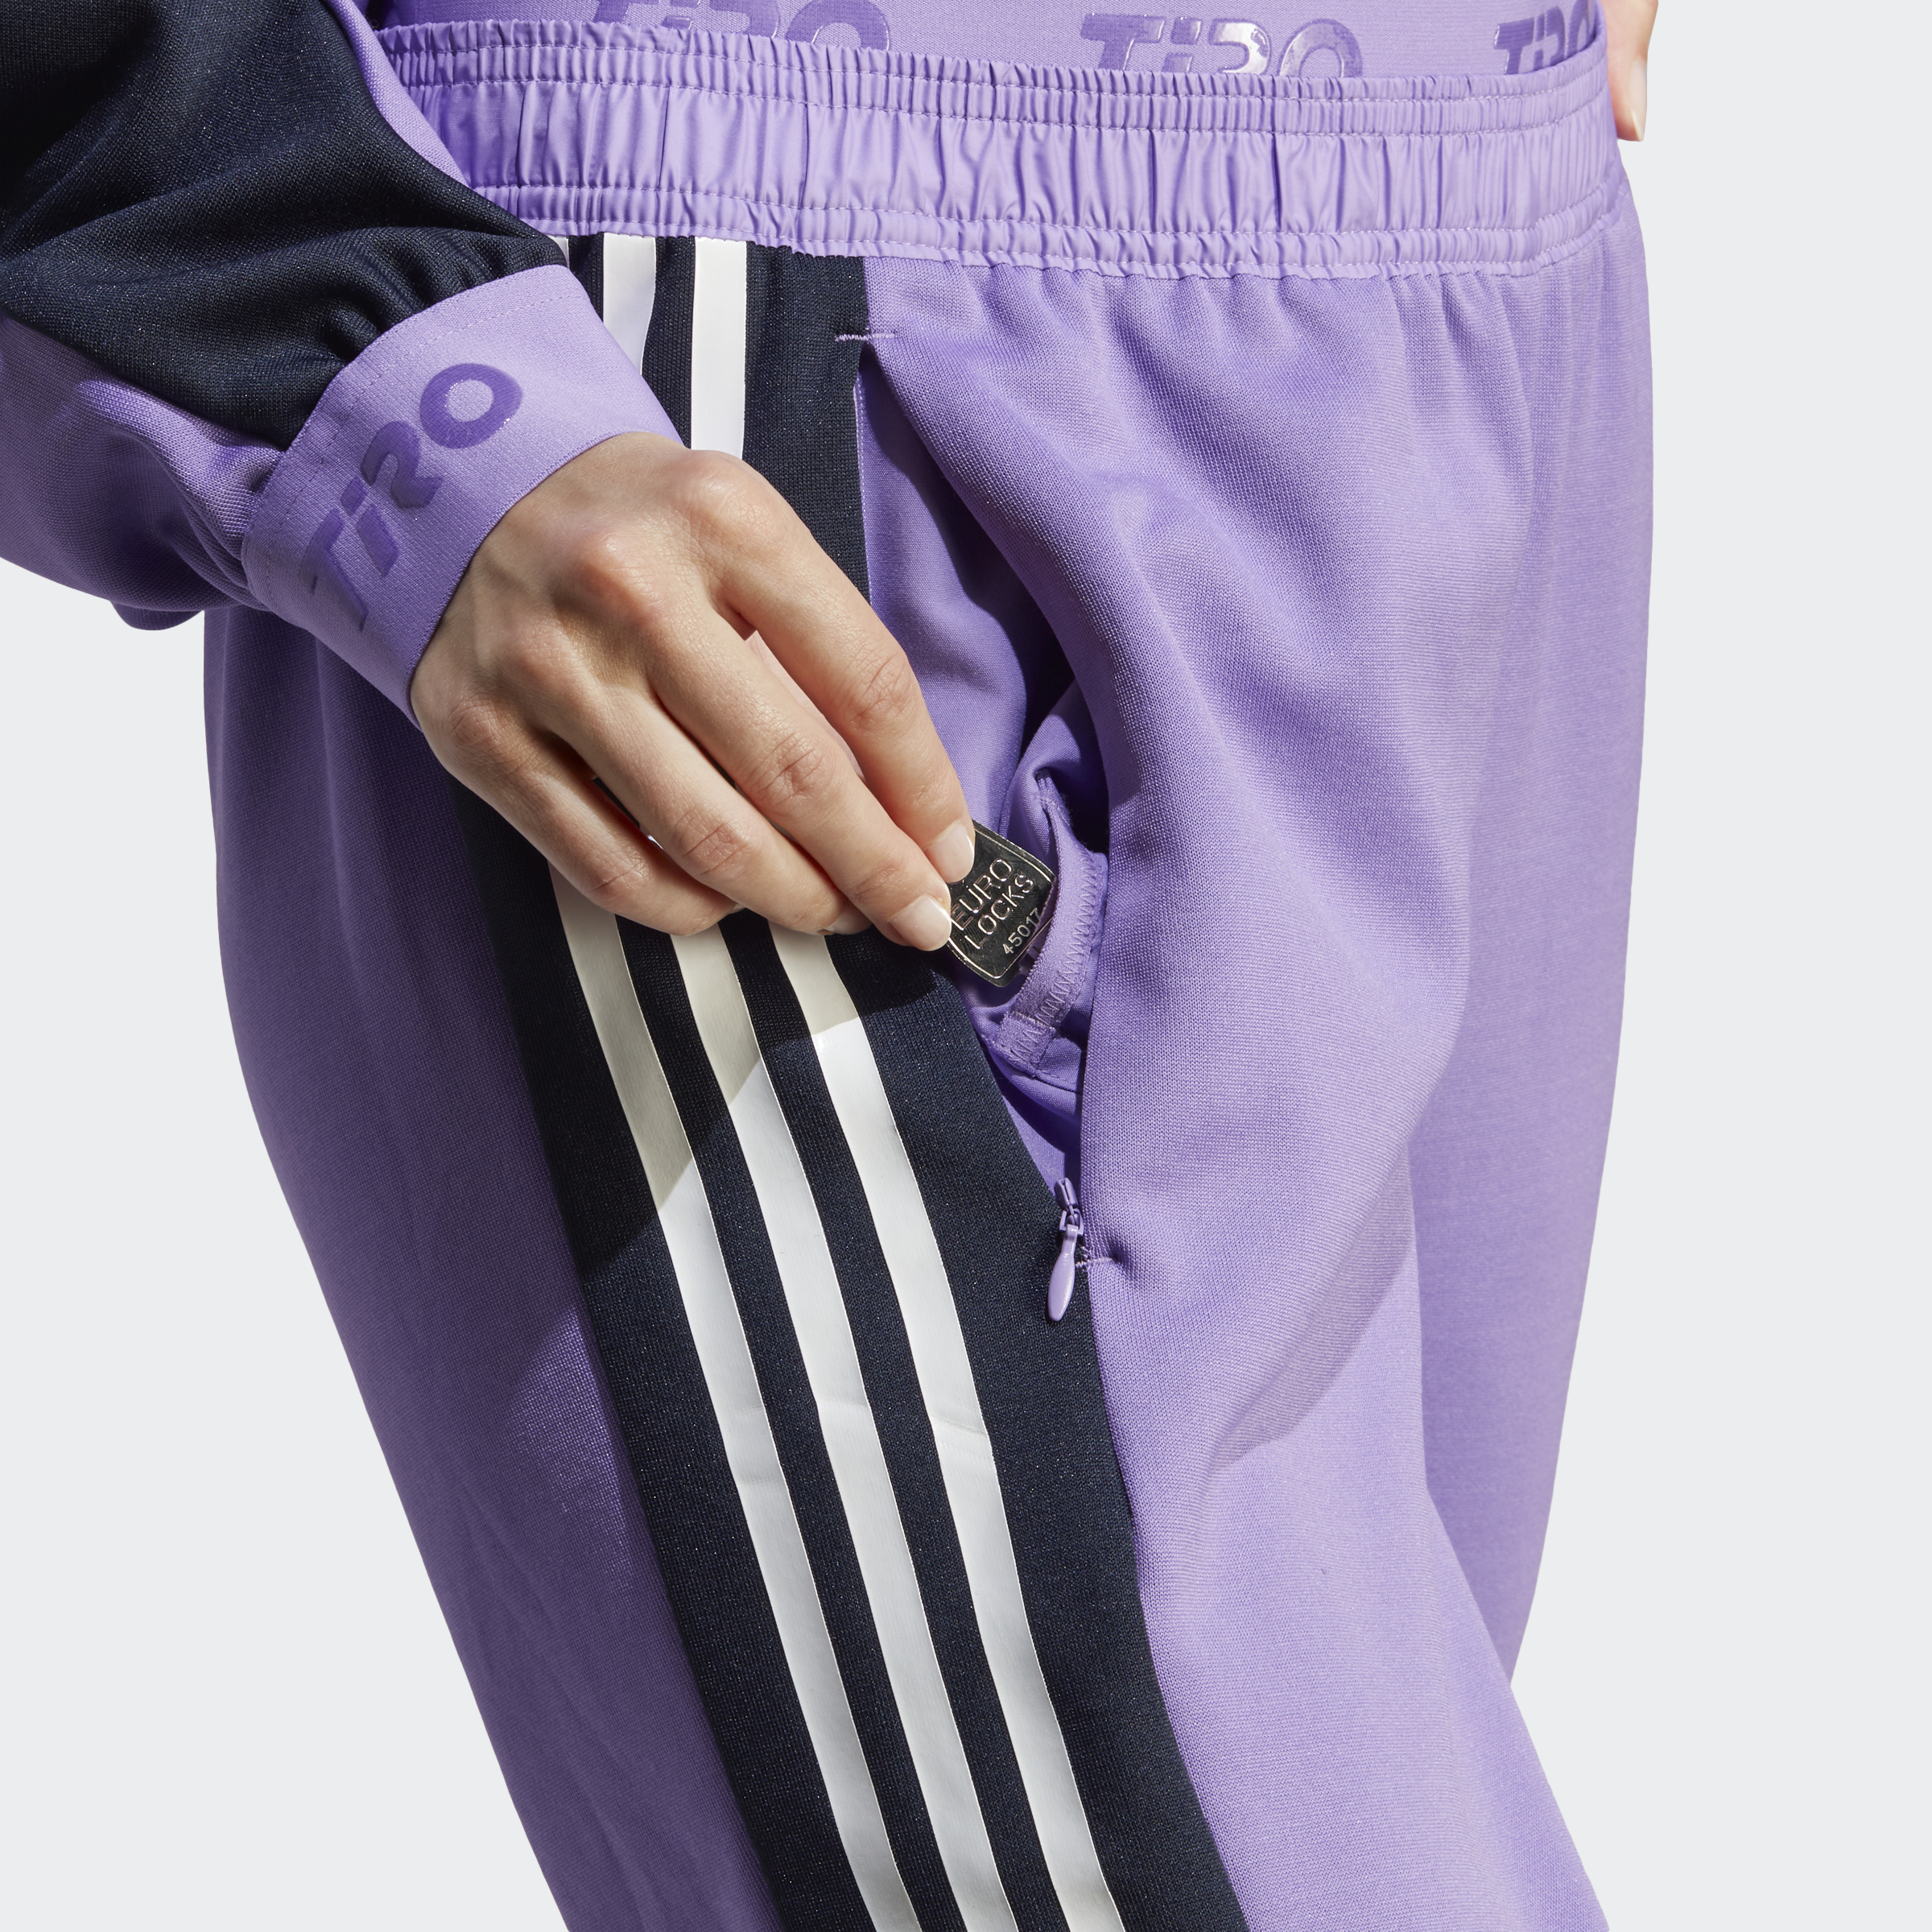 adidas Sportswear AU Women Violet Fusion Tiro Suit-Up Advanced Track Pants